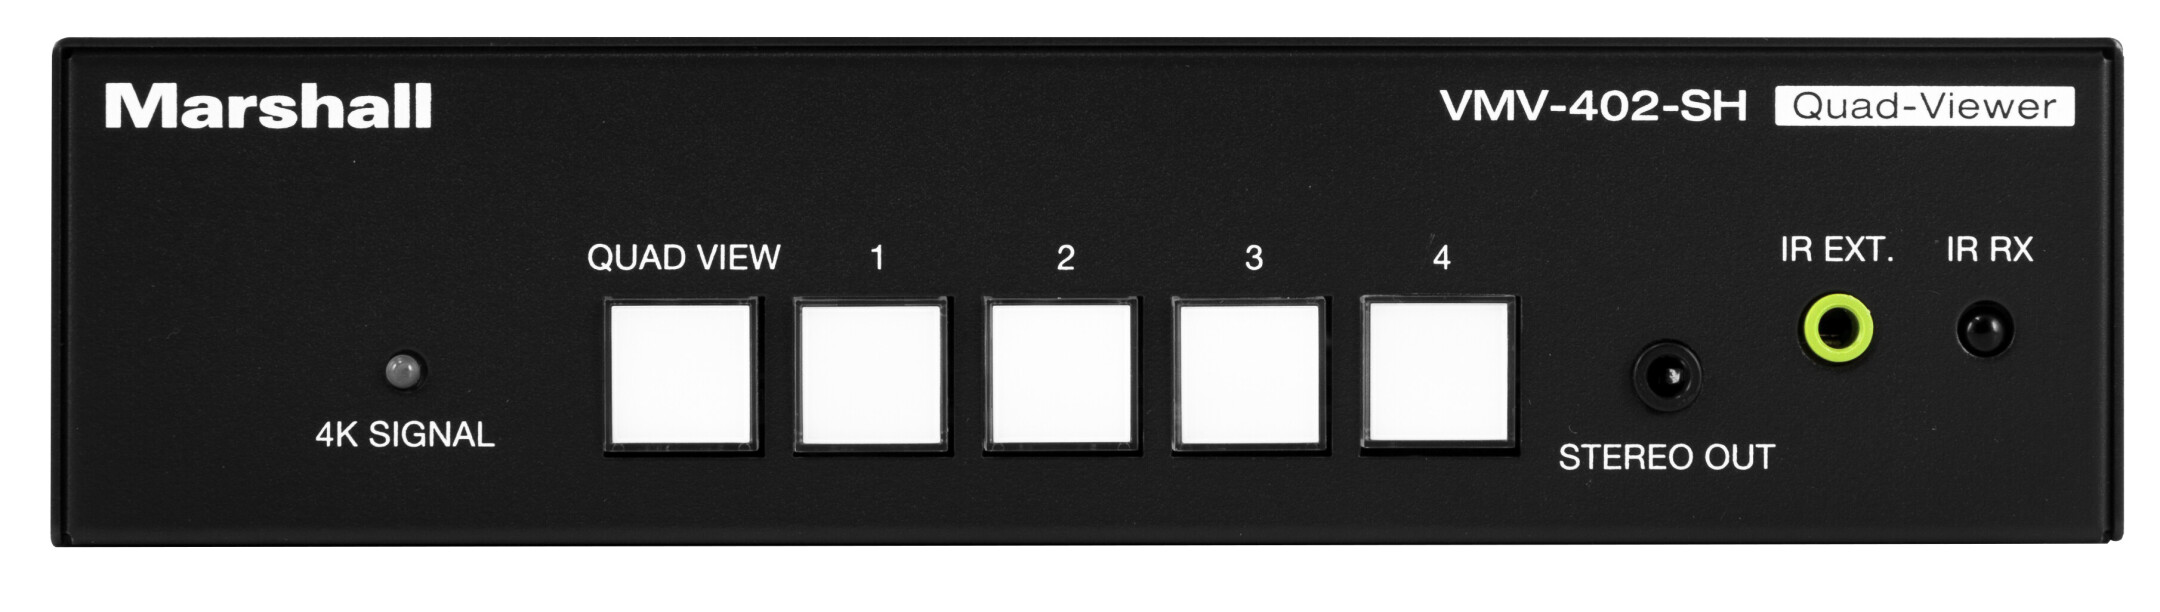 Marshall-Electronics-VMV-402-SH-Quad-Viewer-Switch-mit-Audiometer-Anzeige